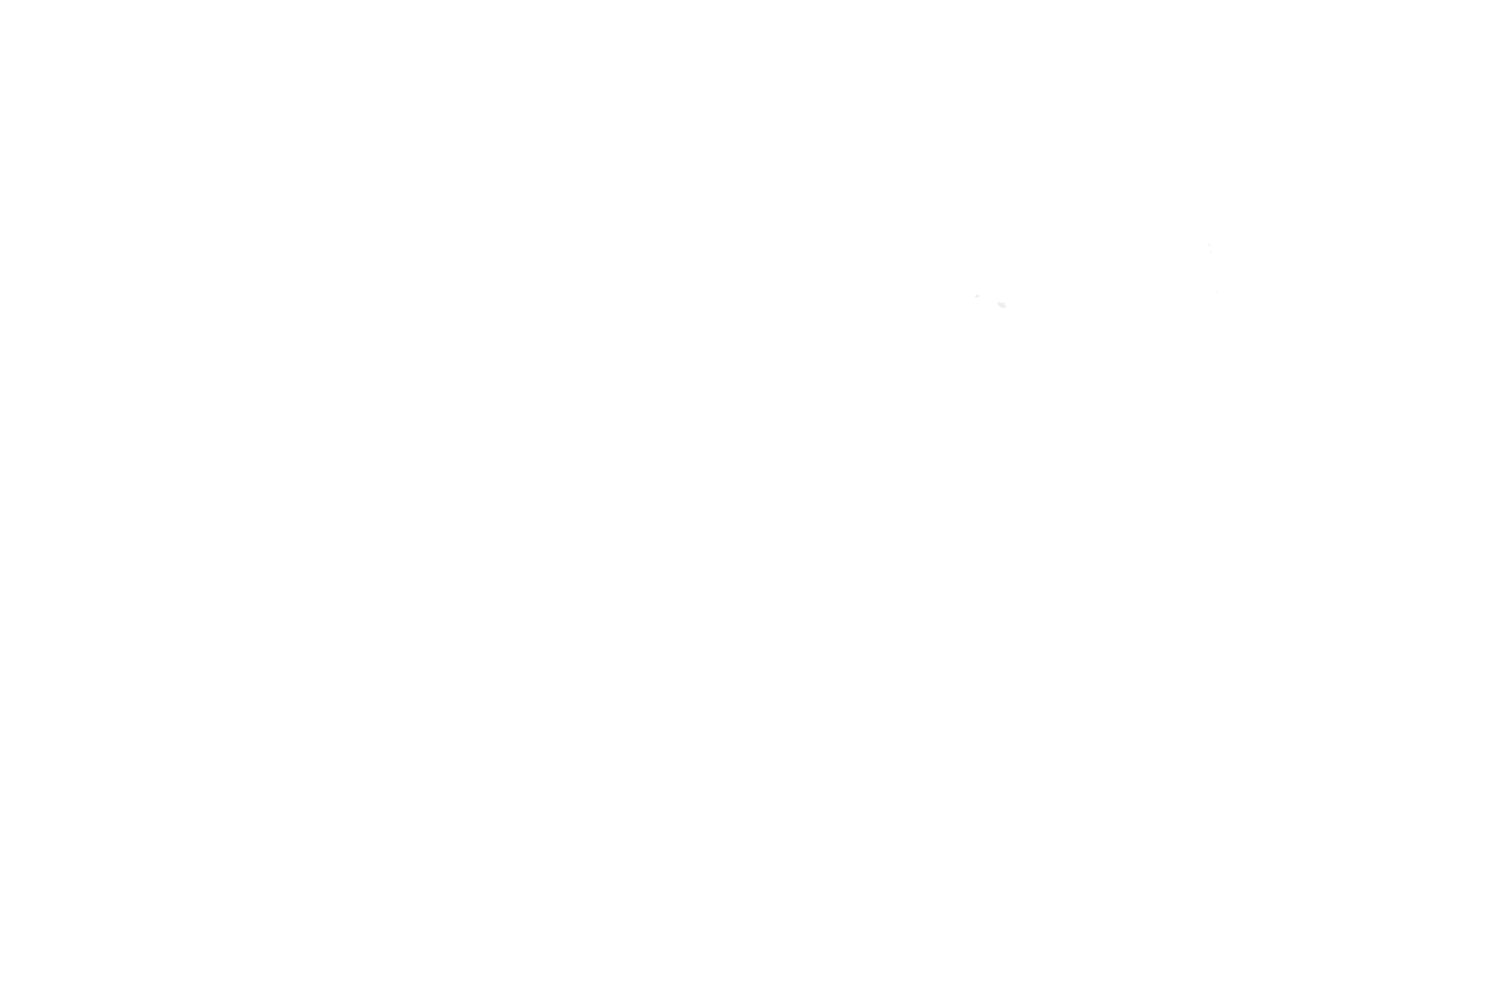 The Royal American